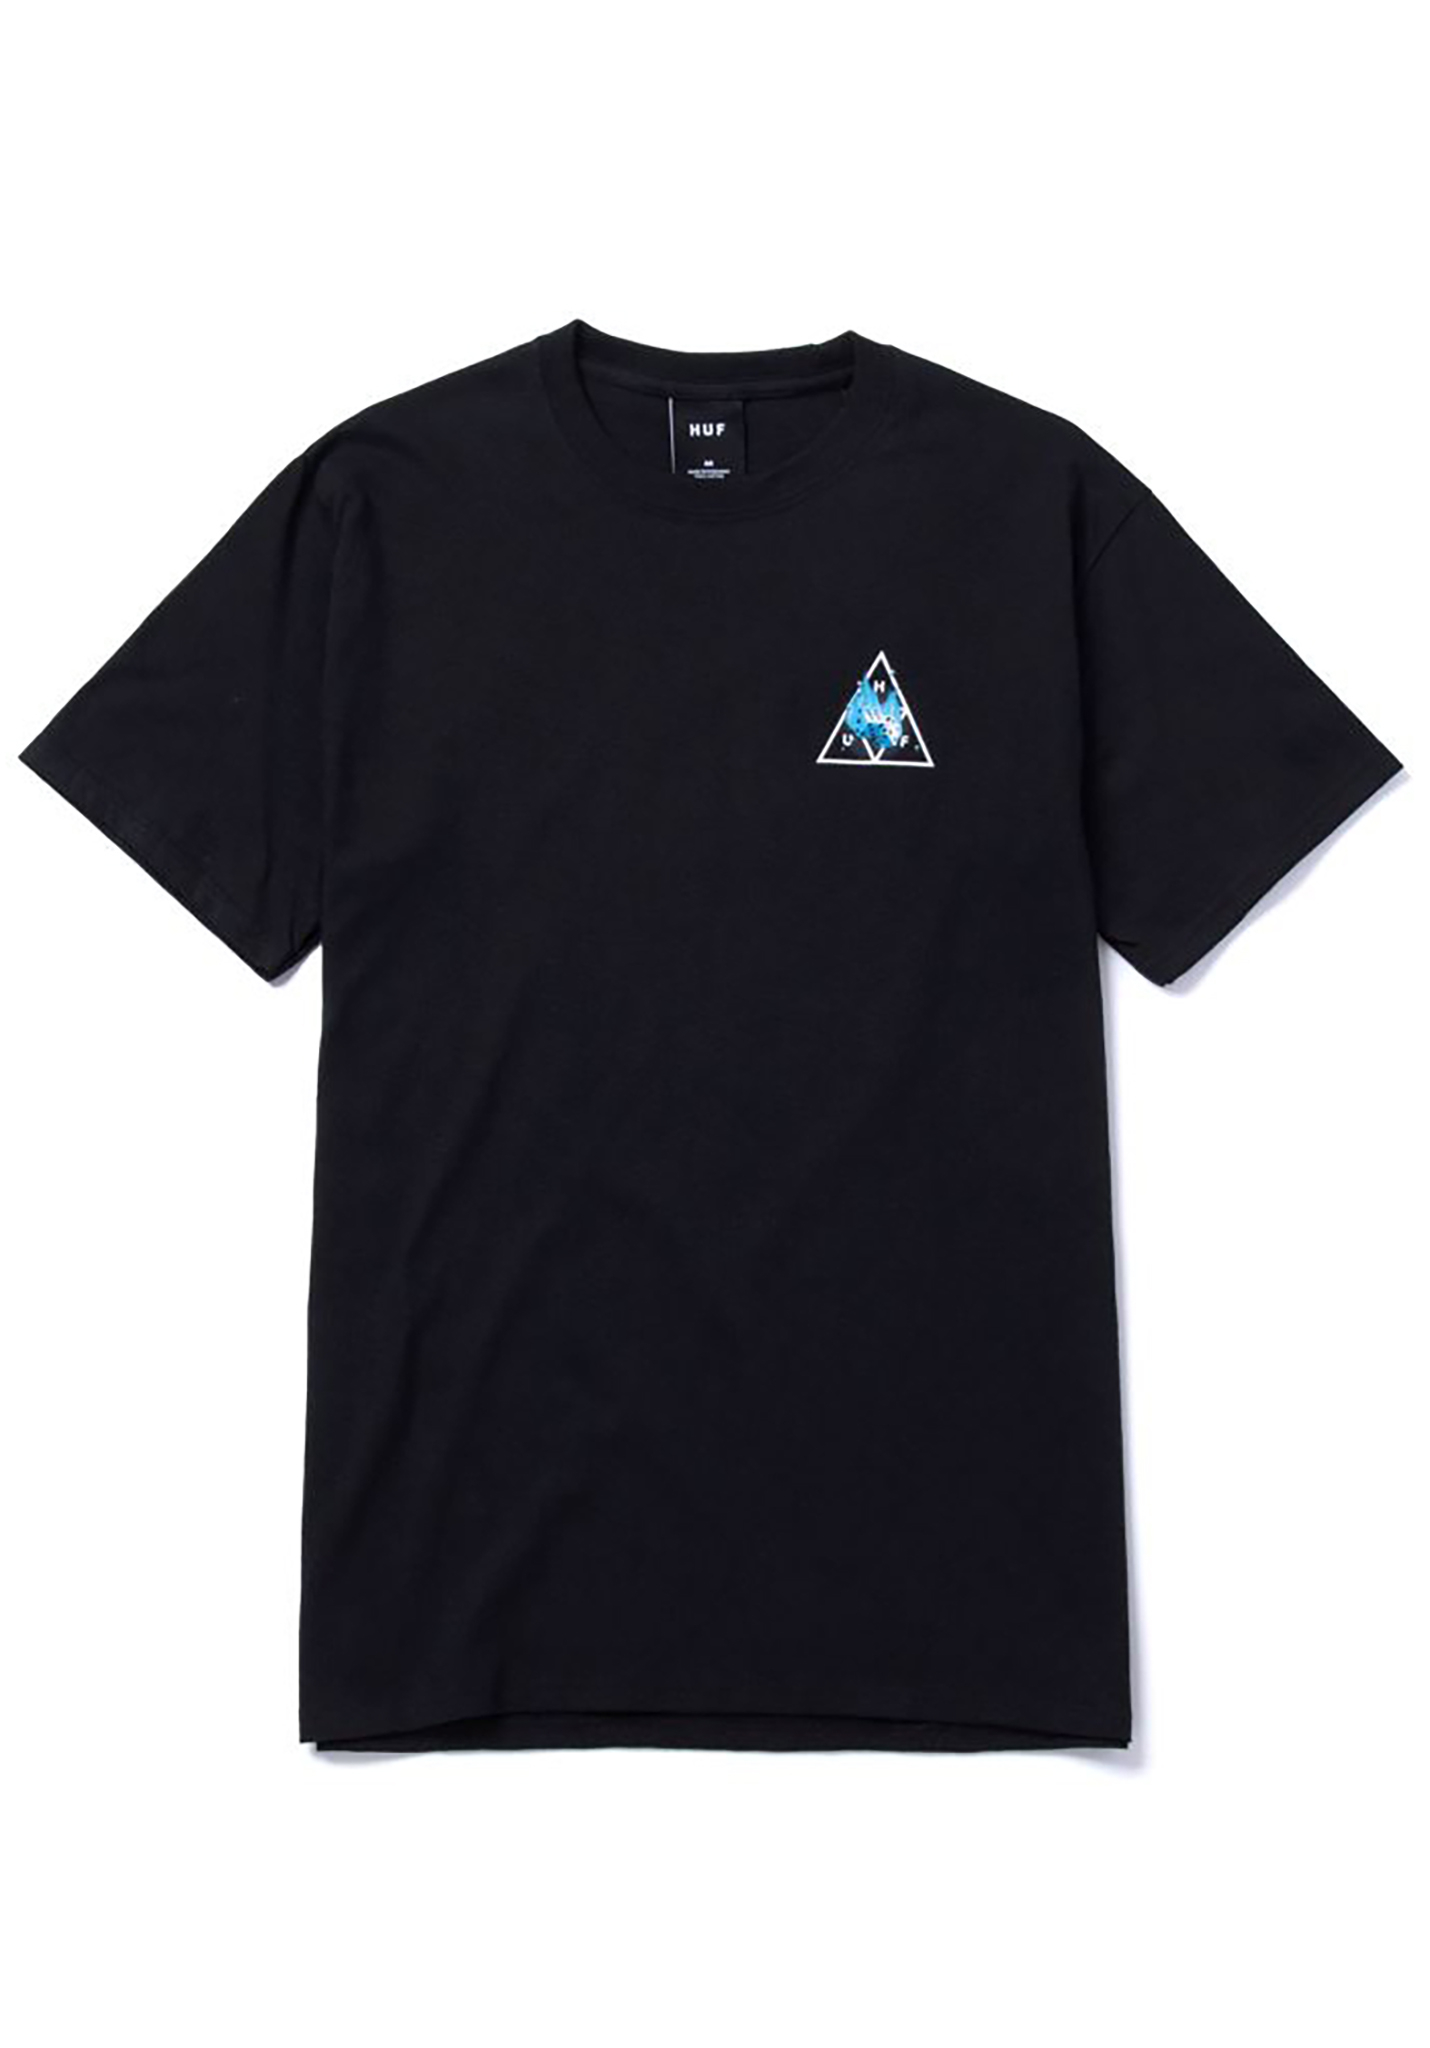 HUF Hot Dice Triple Triangle T-Shirt black M